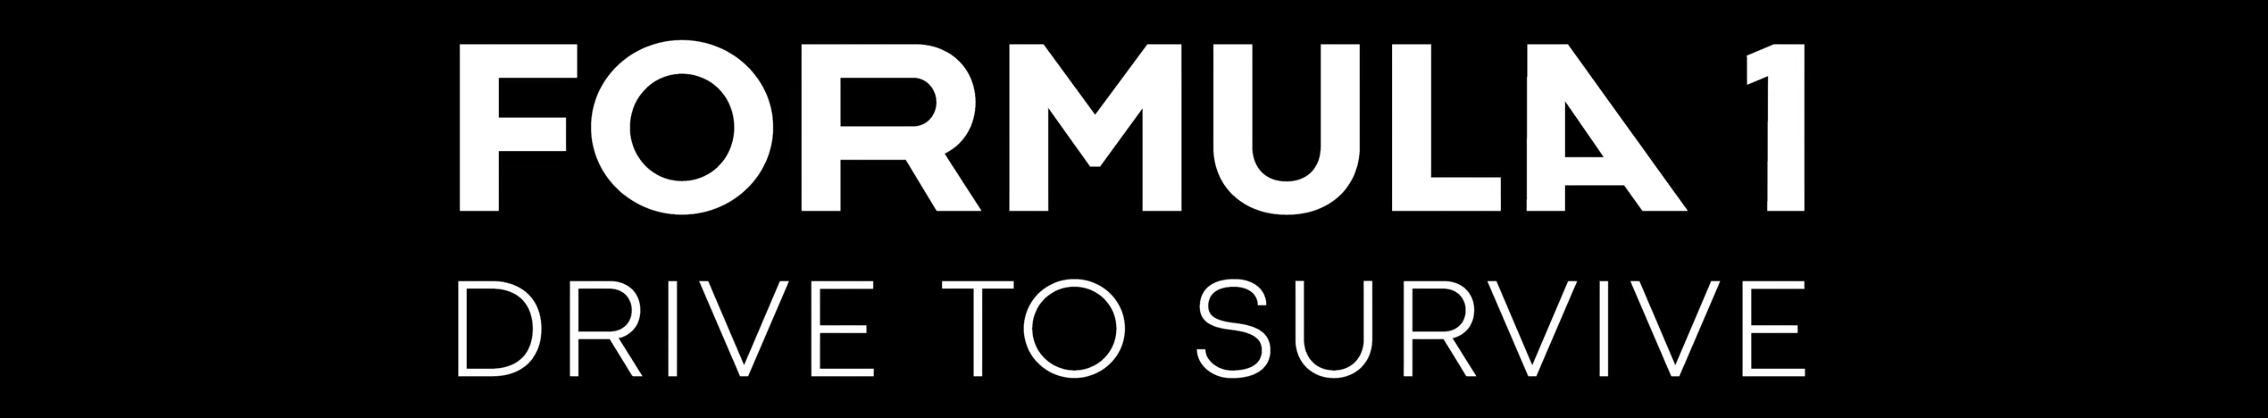 Formula 1 - Drive to survive